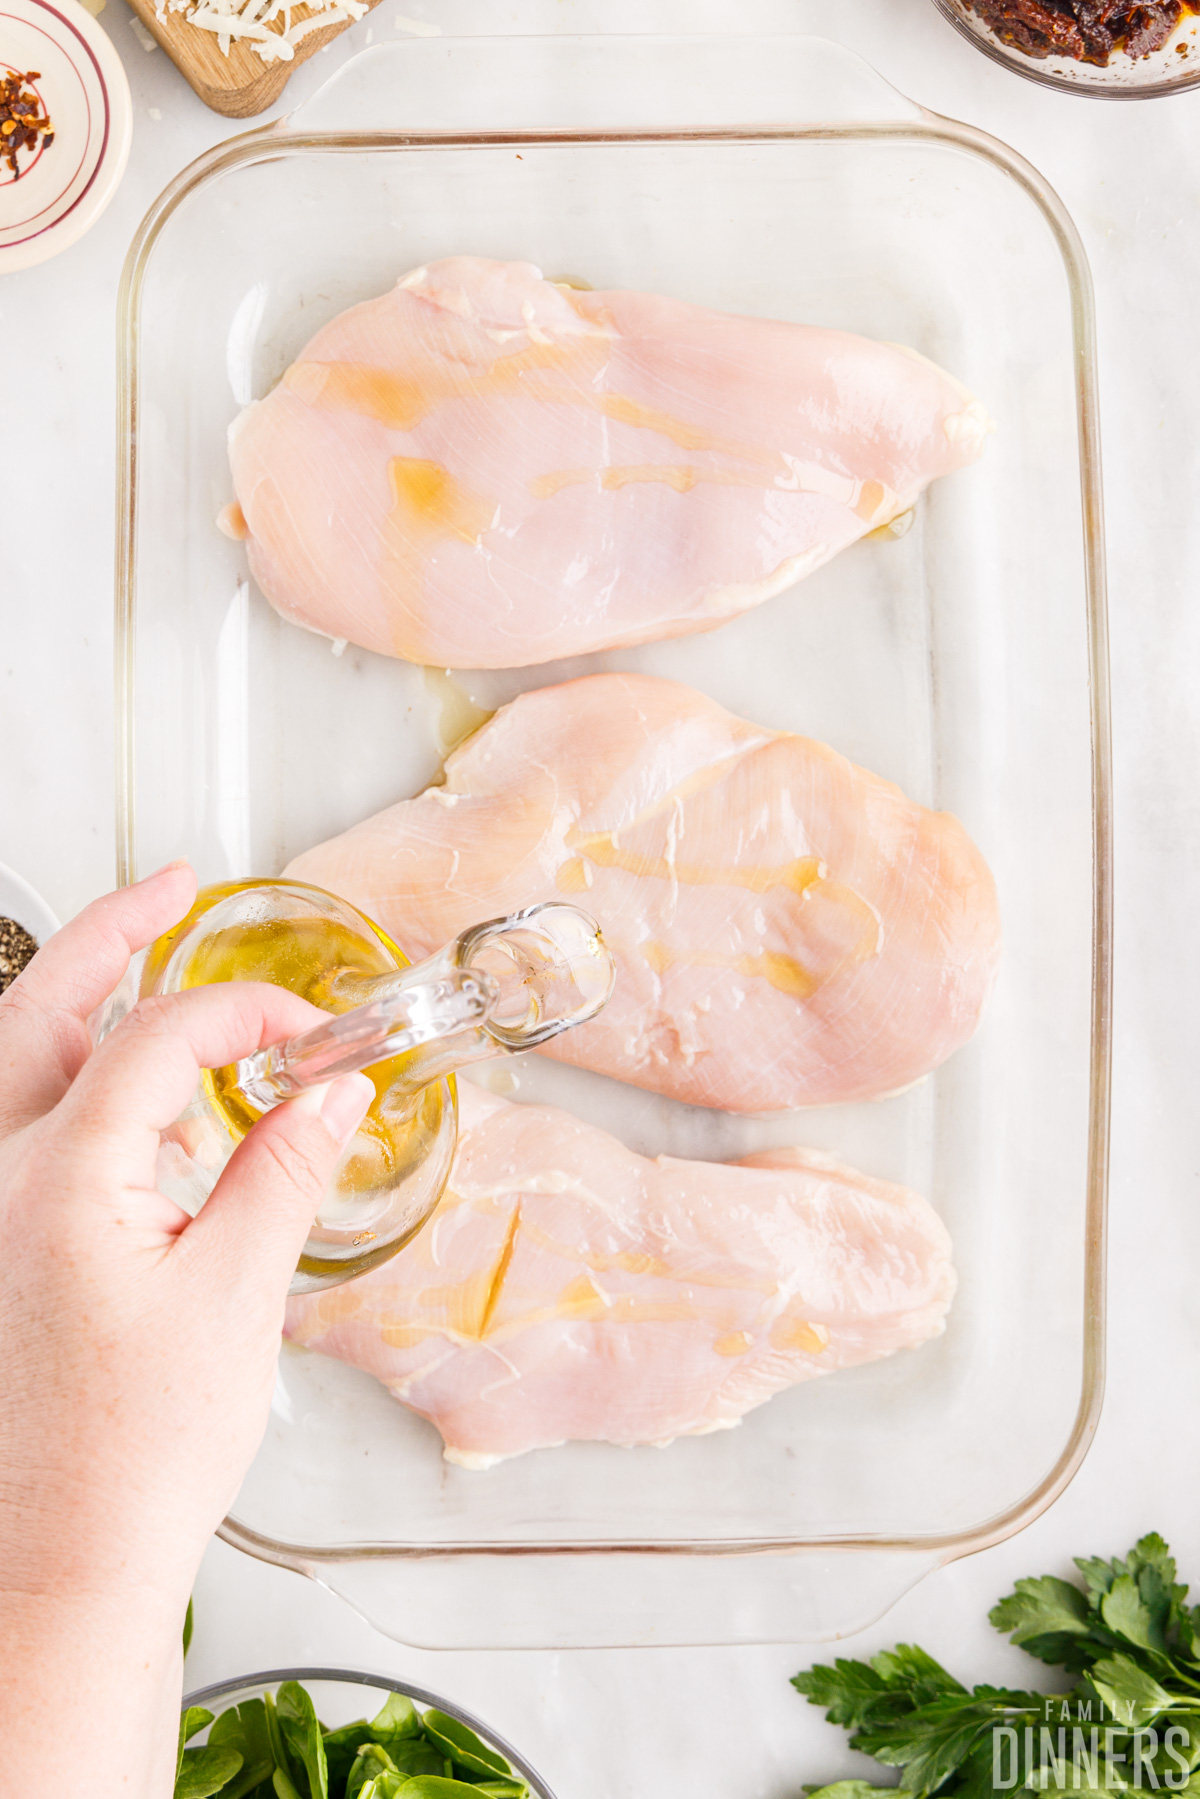 rubbing oil on chicken breasts